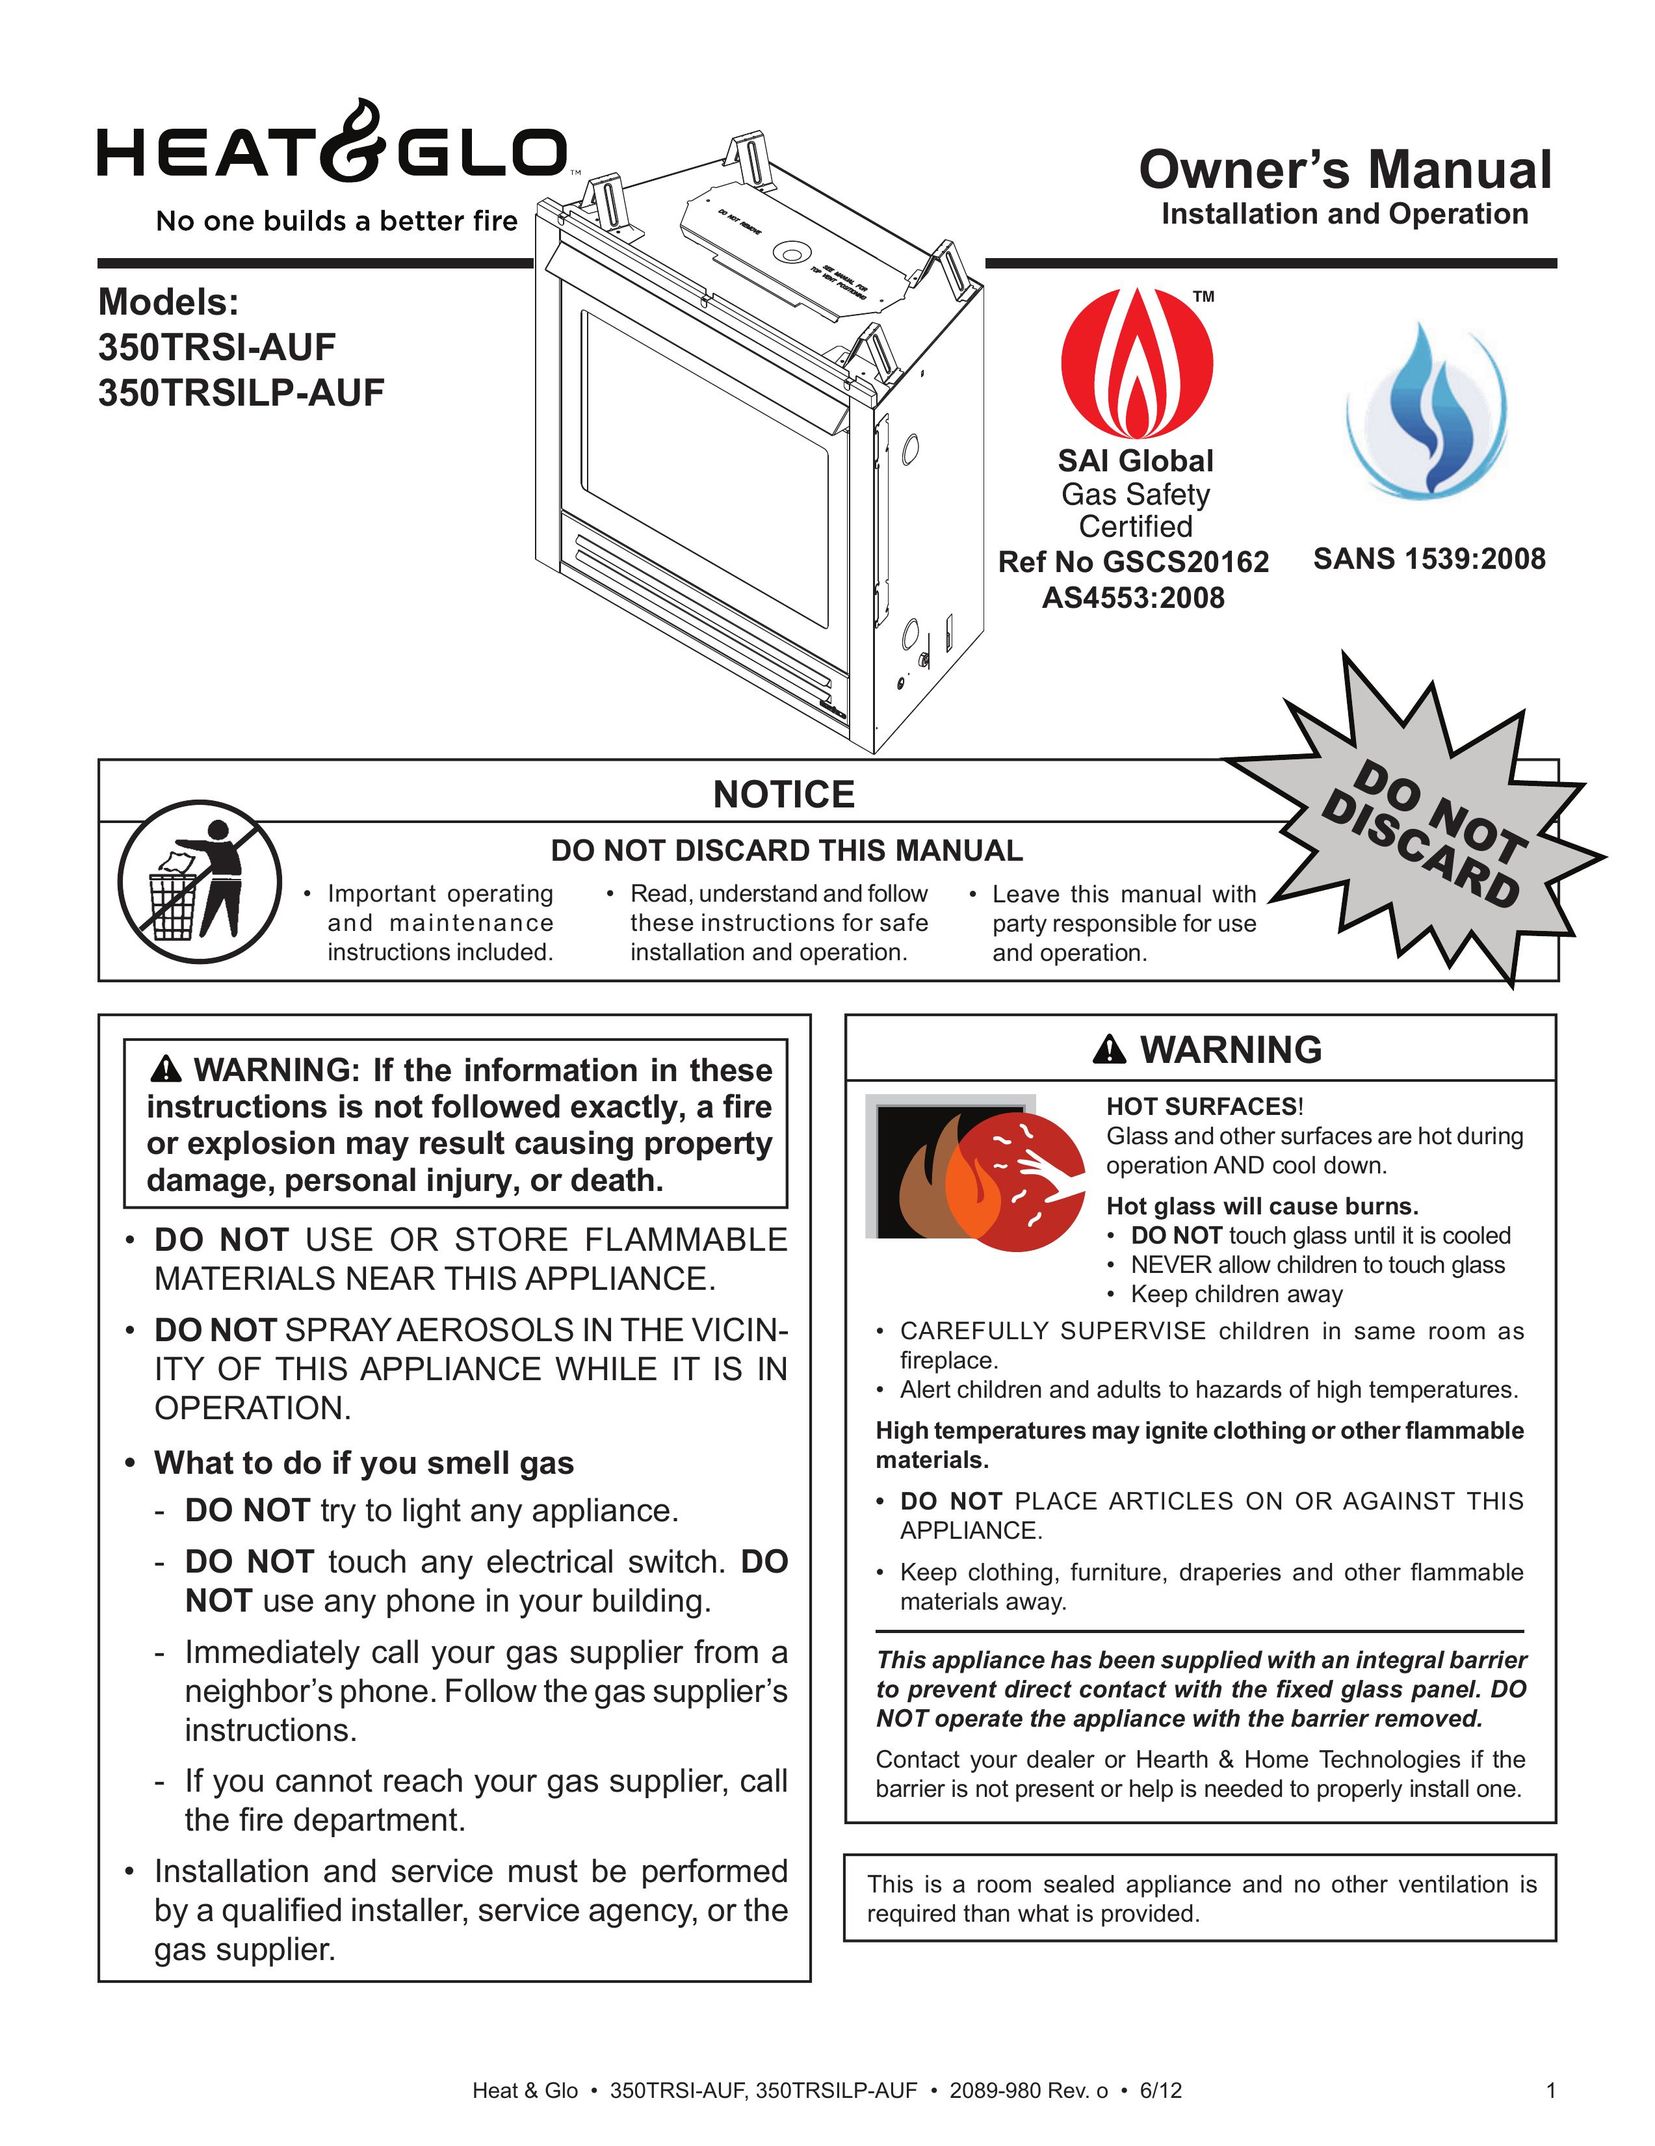 Heat & Glo LifeStyle 350TRSILP-AUF Gas Heater User Manual